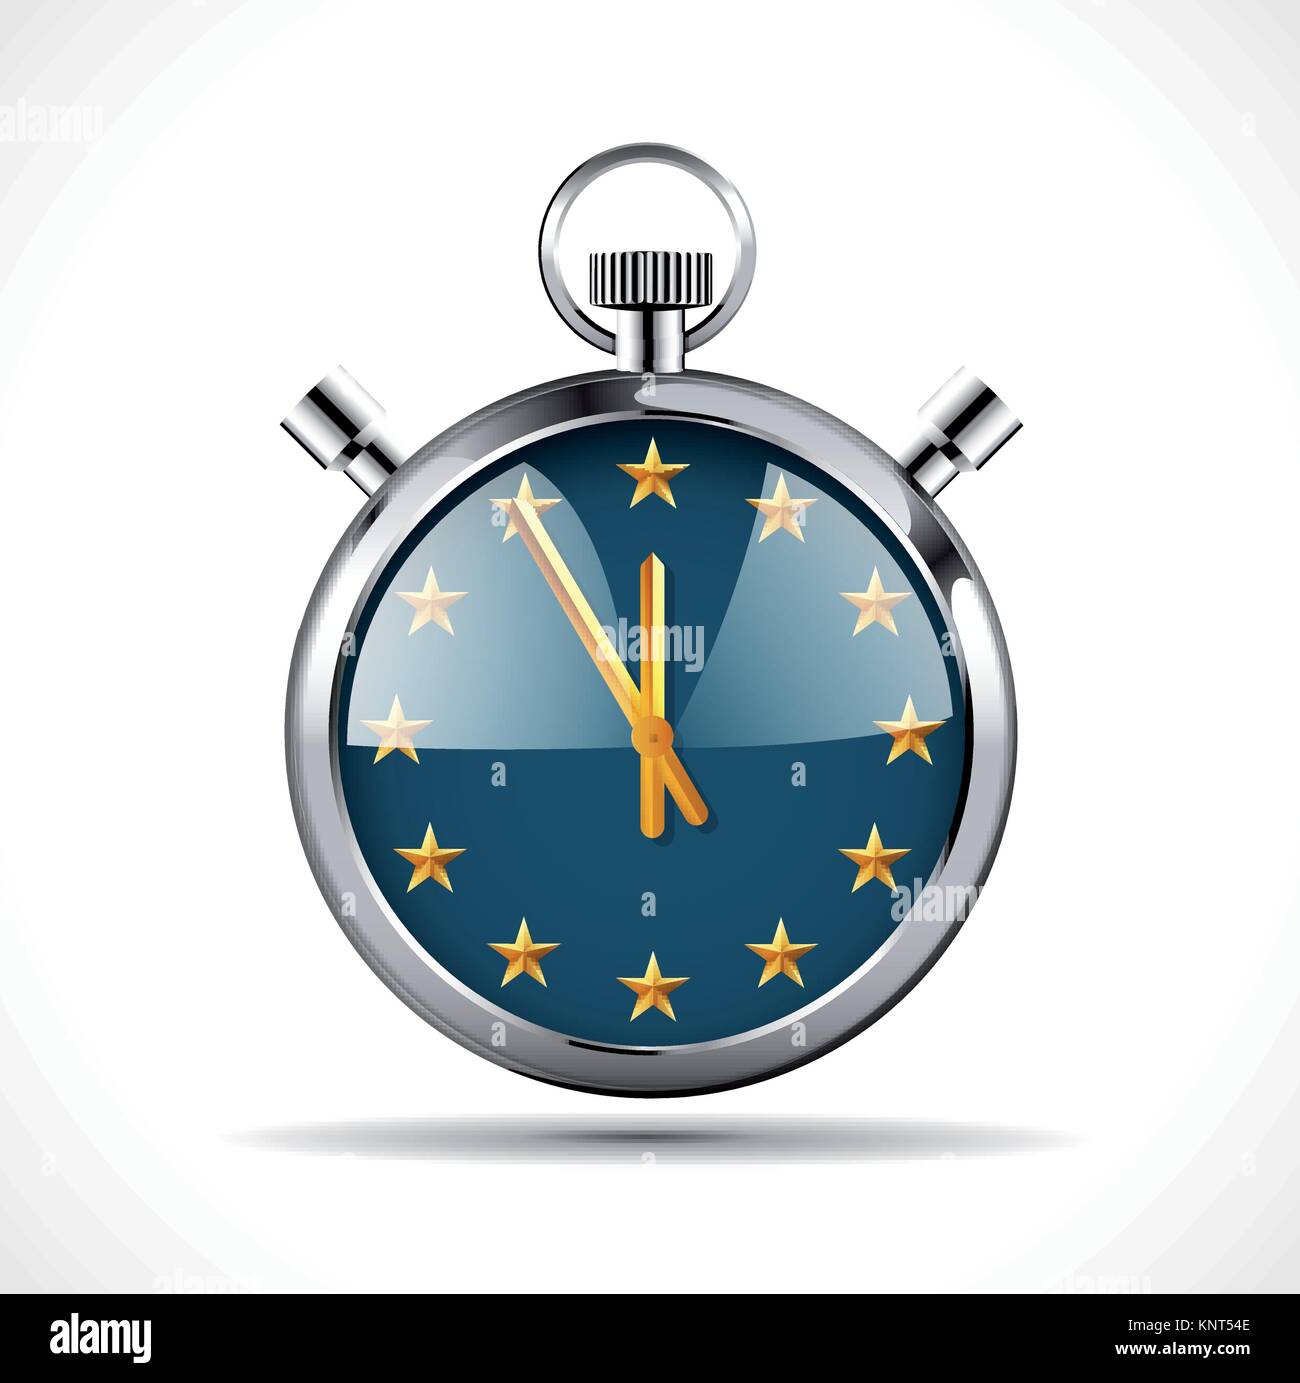 Alarm clock with EU flag - Wake up Europe concept – stock illustratio Stock Vector